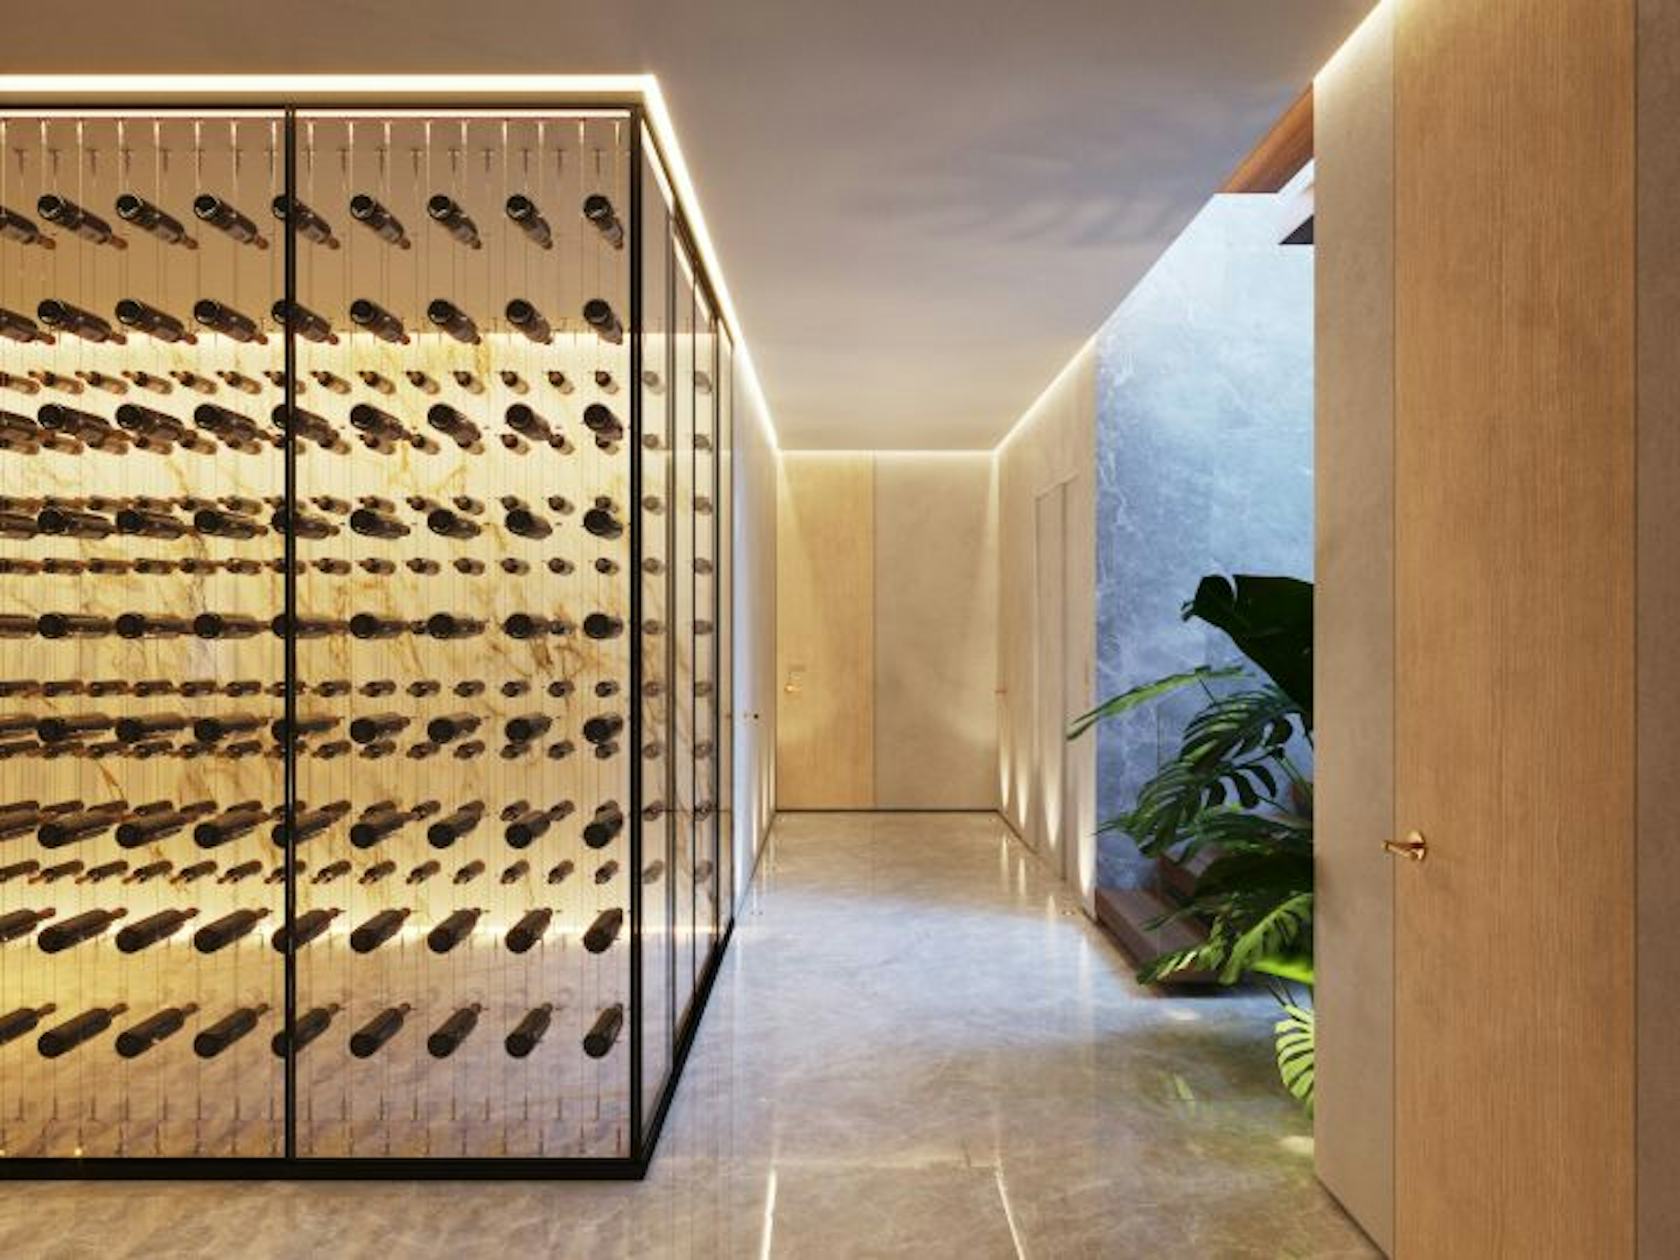 liquor alcohol beverage wine wine cellar